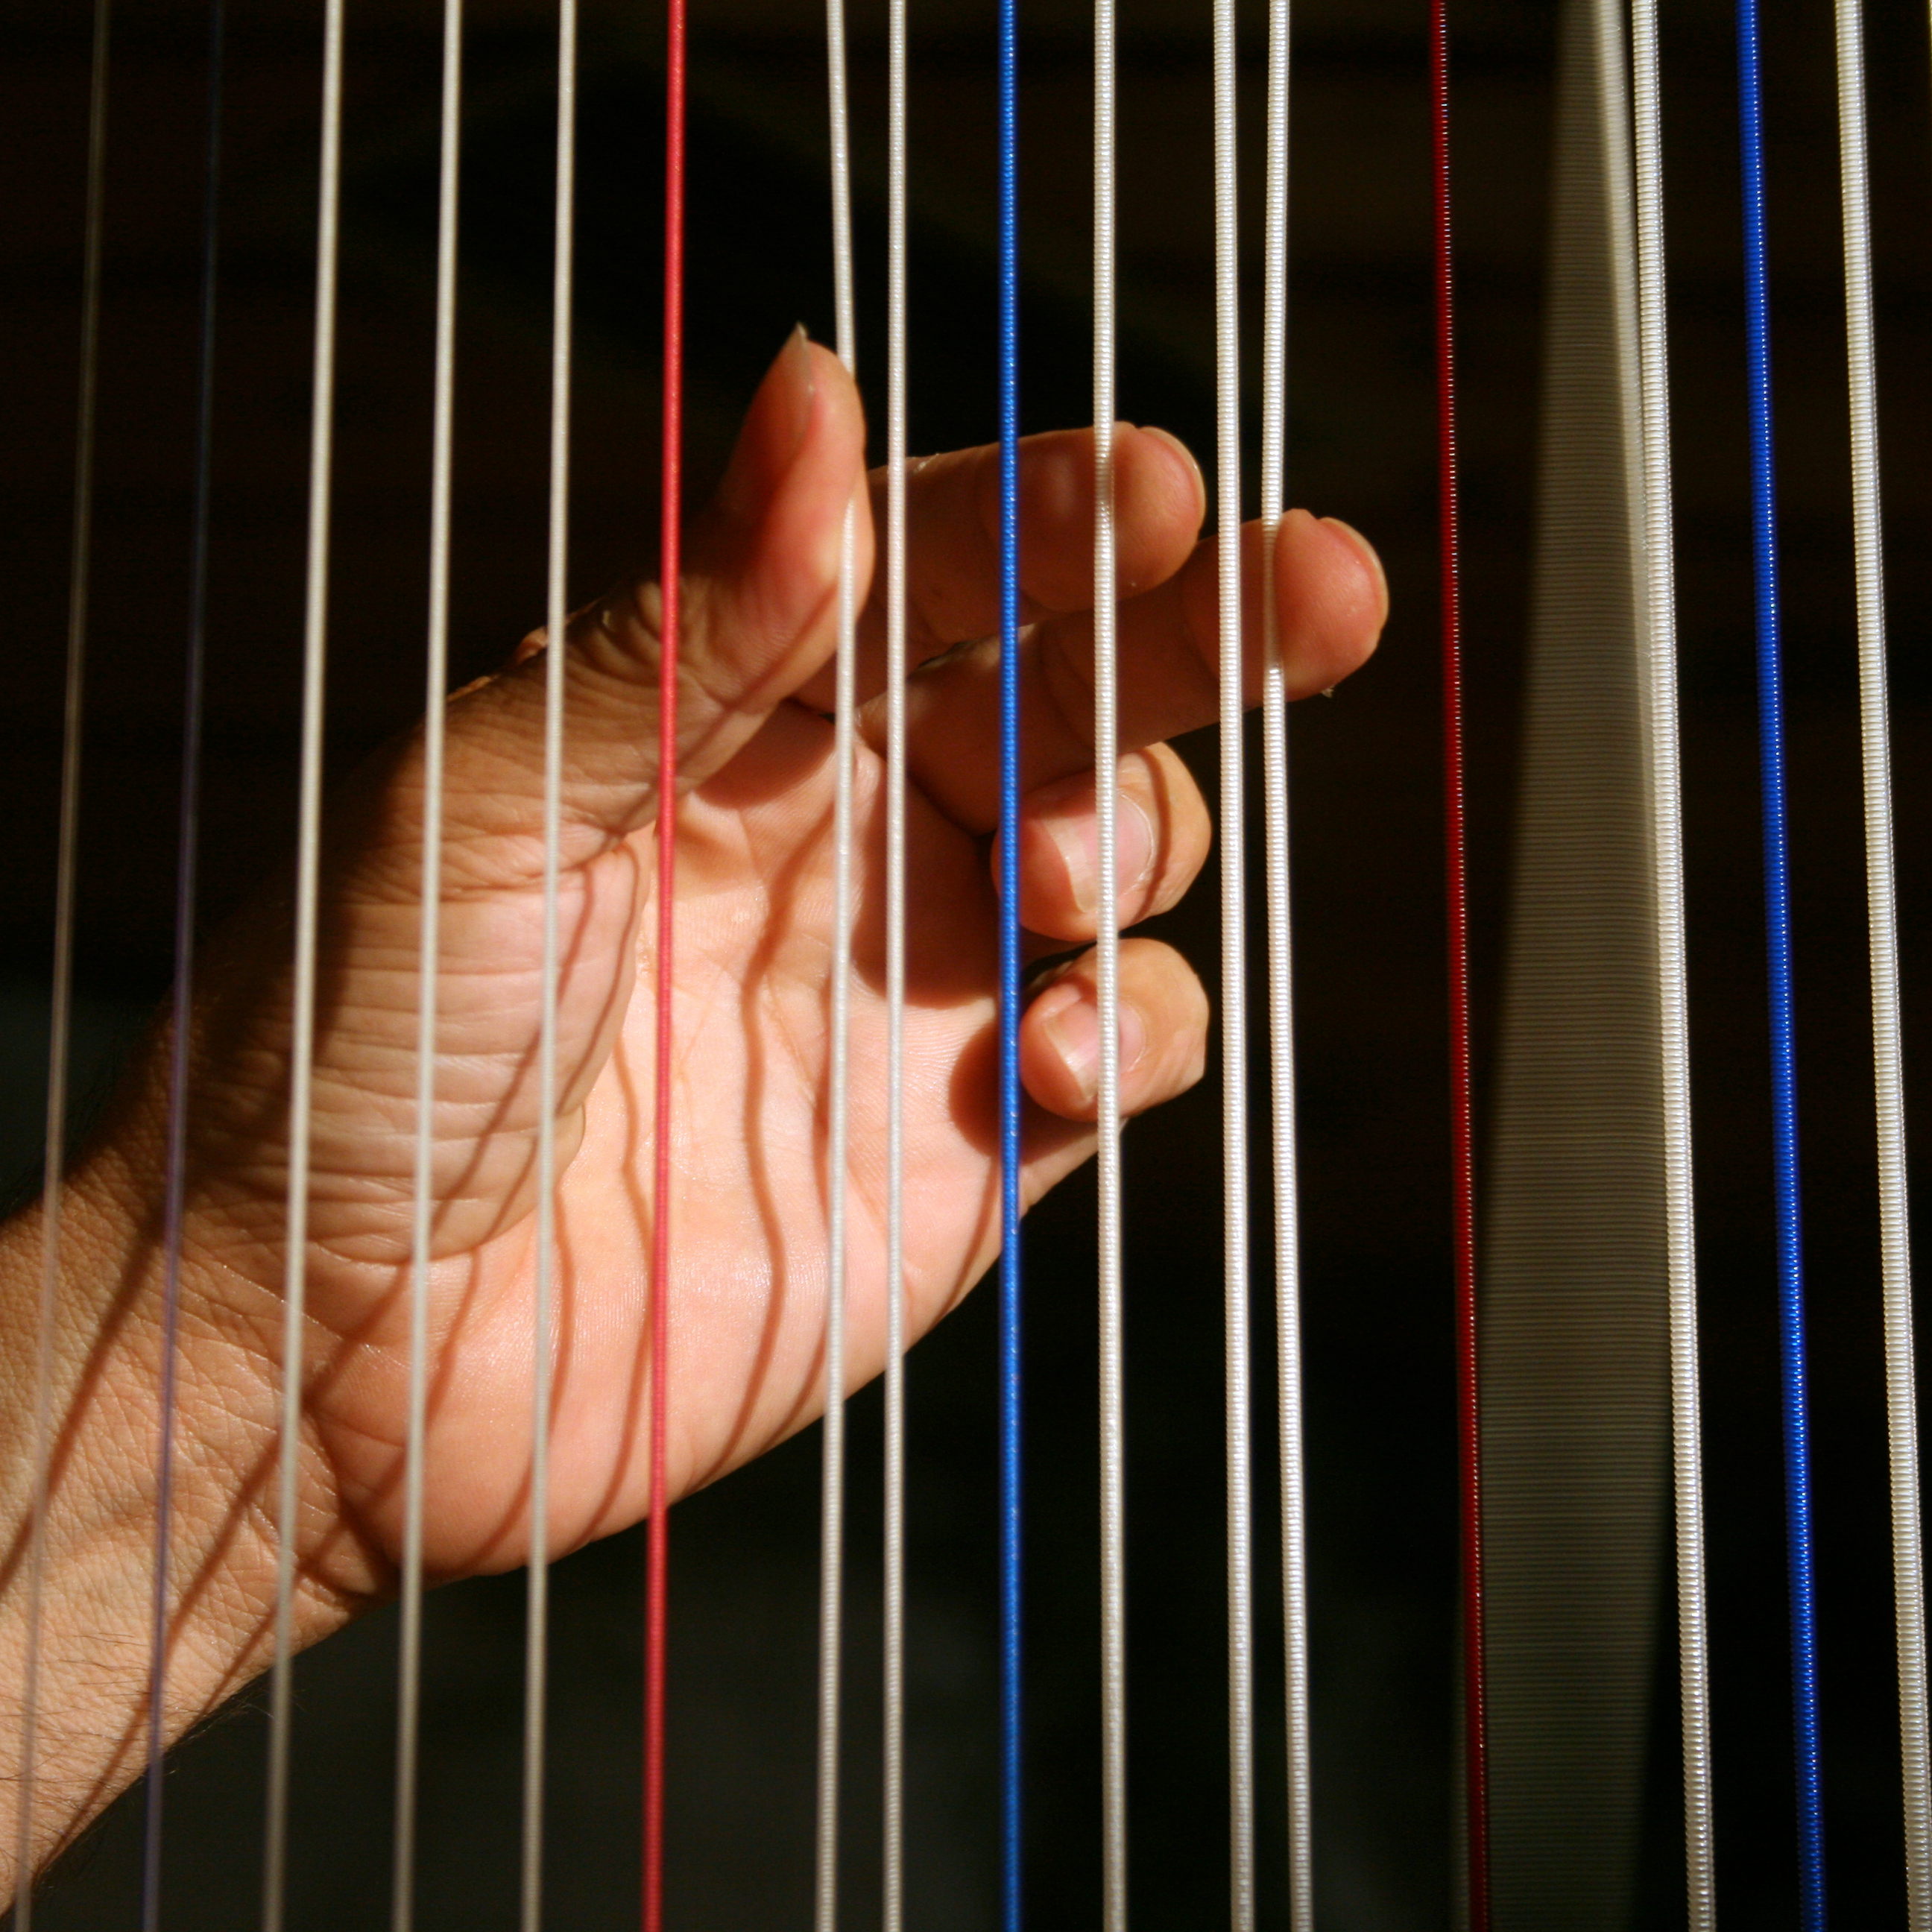 Harpist hands img 4997-b